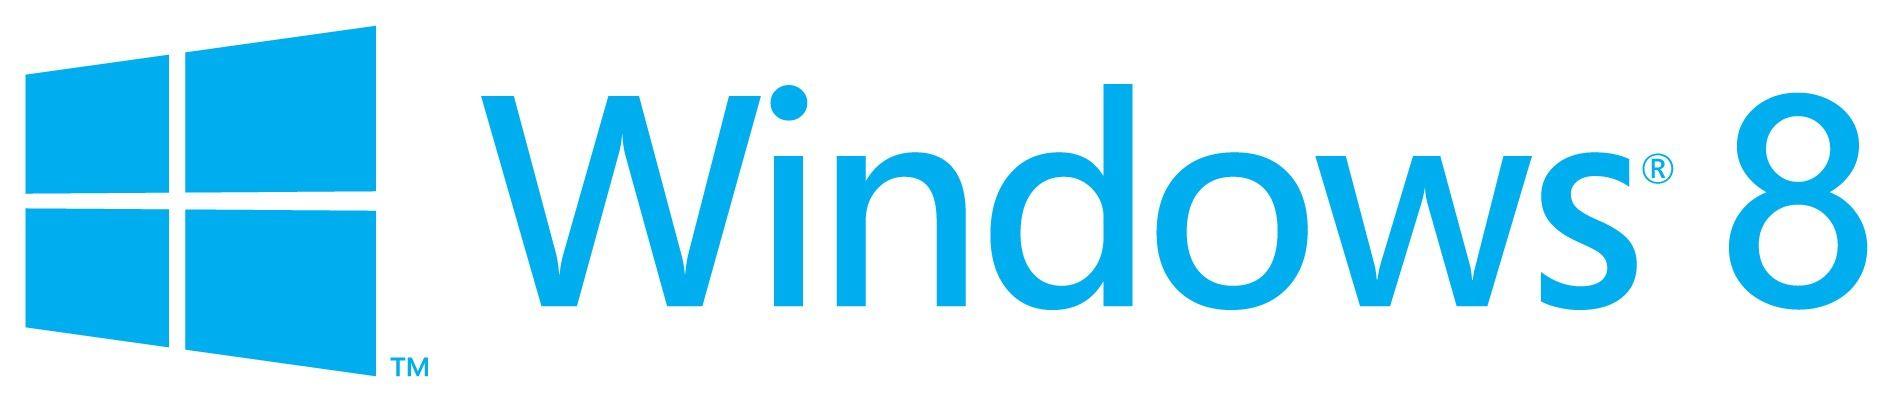 Windows 8 Official Logo - Redesigning the Windows Logo | Windows Experience Blog